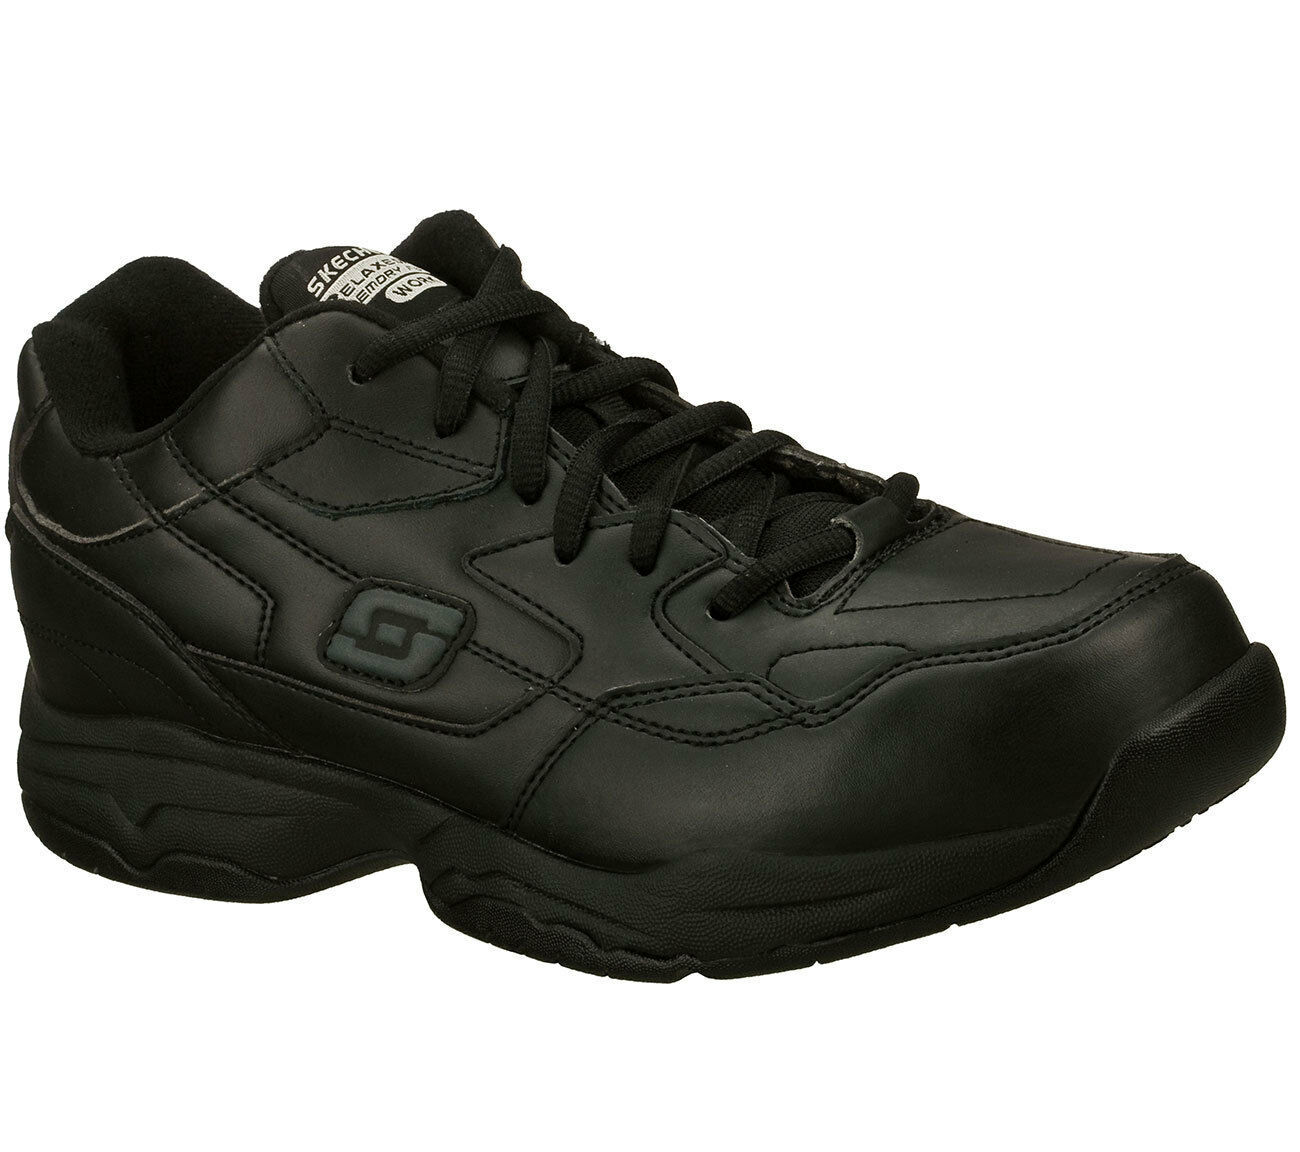 Skechers Black shoes Memory Foam Work Men's Comfort Casual Slip ...